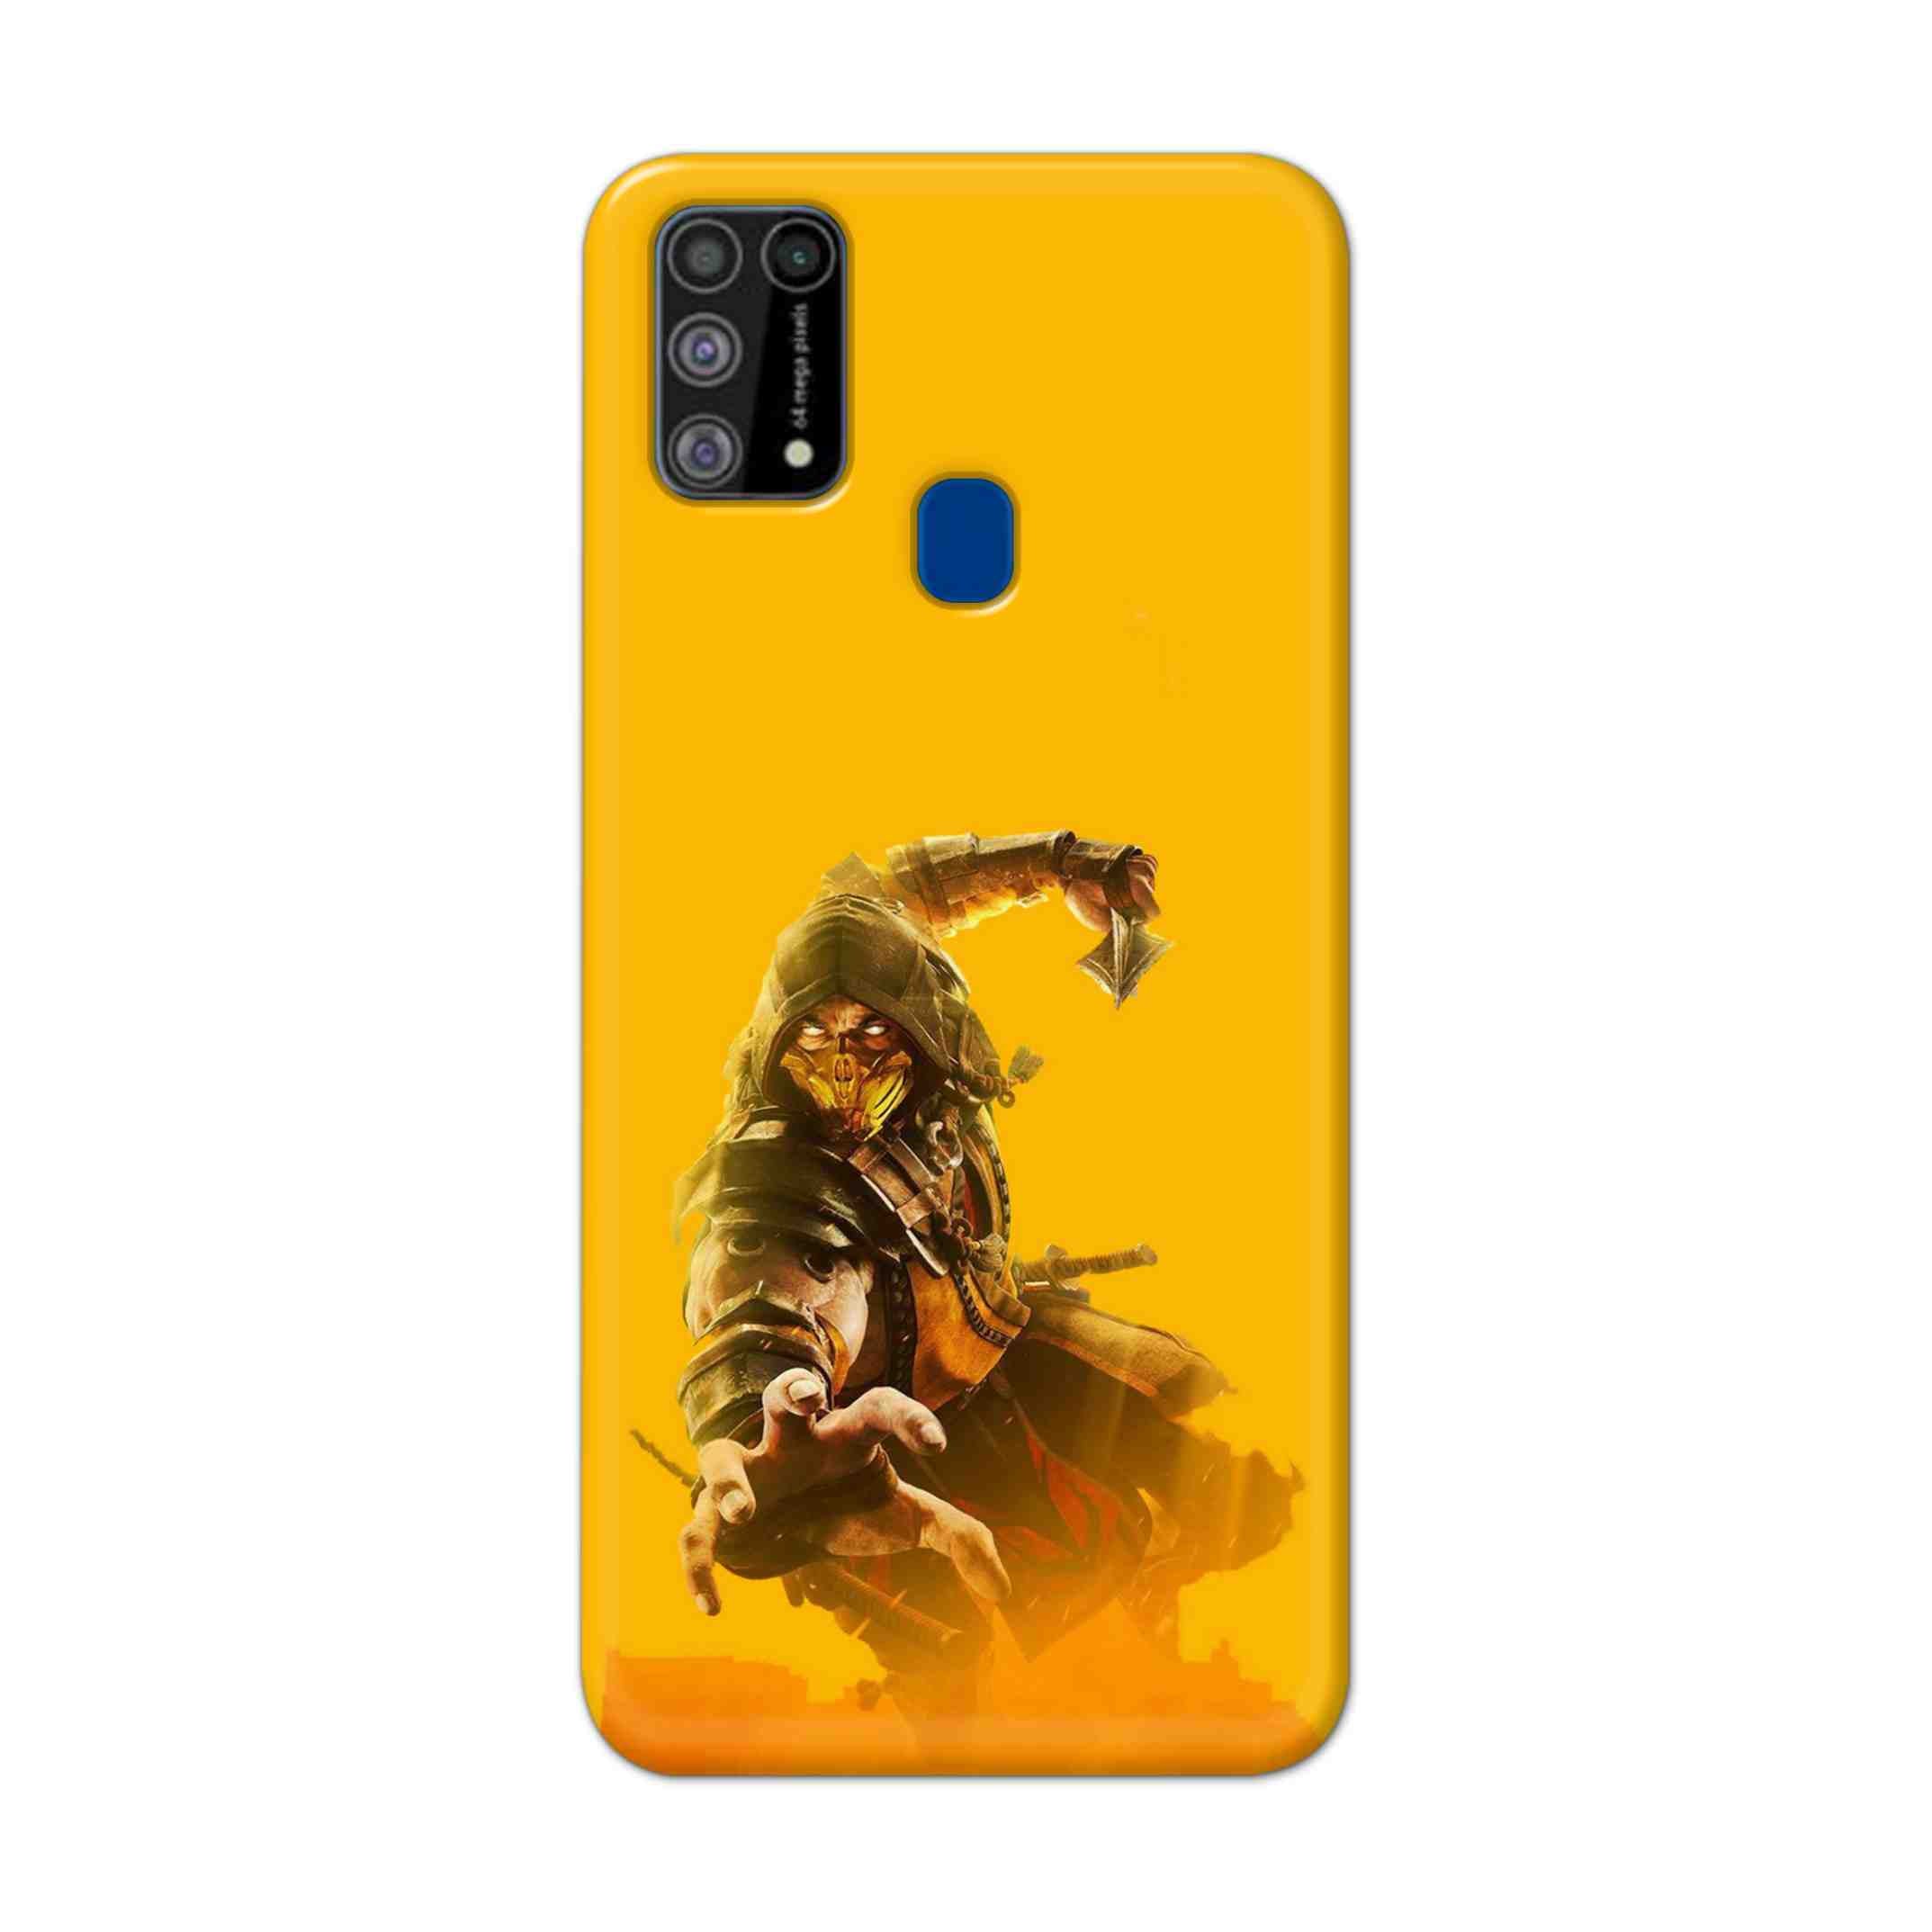 Buy Mortal Kombat Hard Back Mobile Phone Case Cover For Samsung Galaxy M31 Online